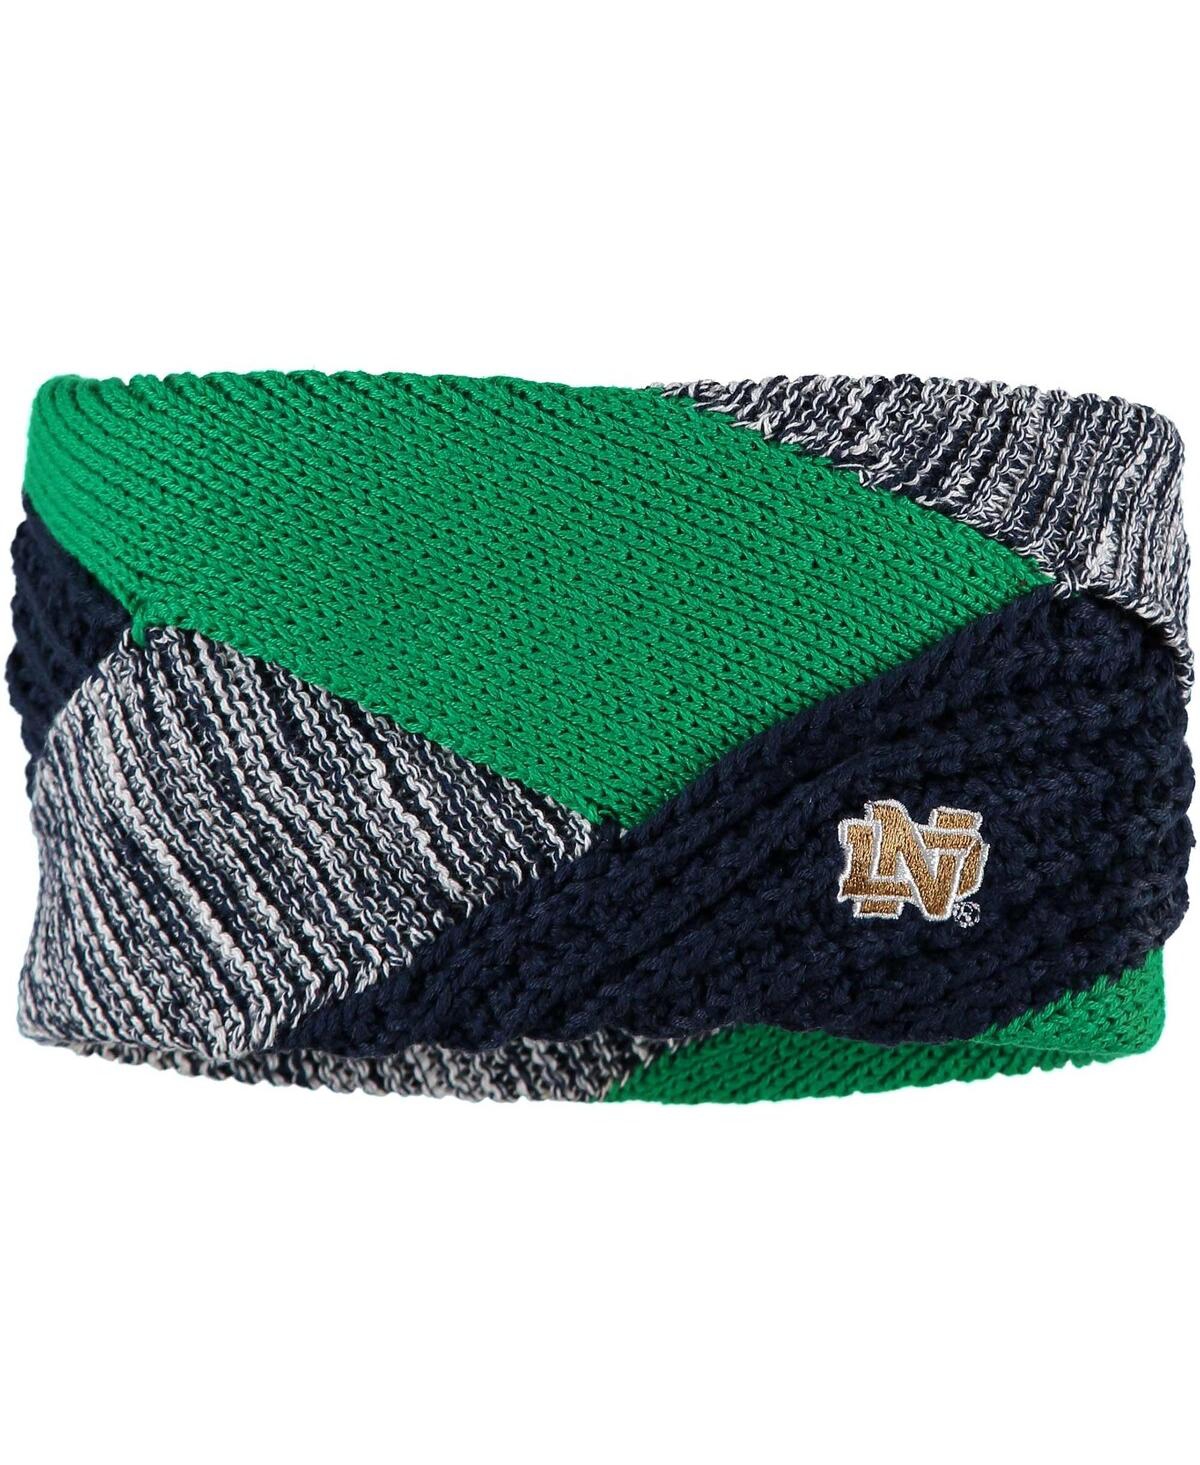 Zoozatz Women's  Notre Dame Fighting Irish Criss Cross Headband In Green,black